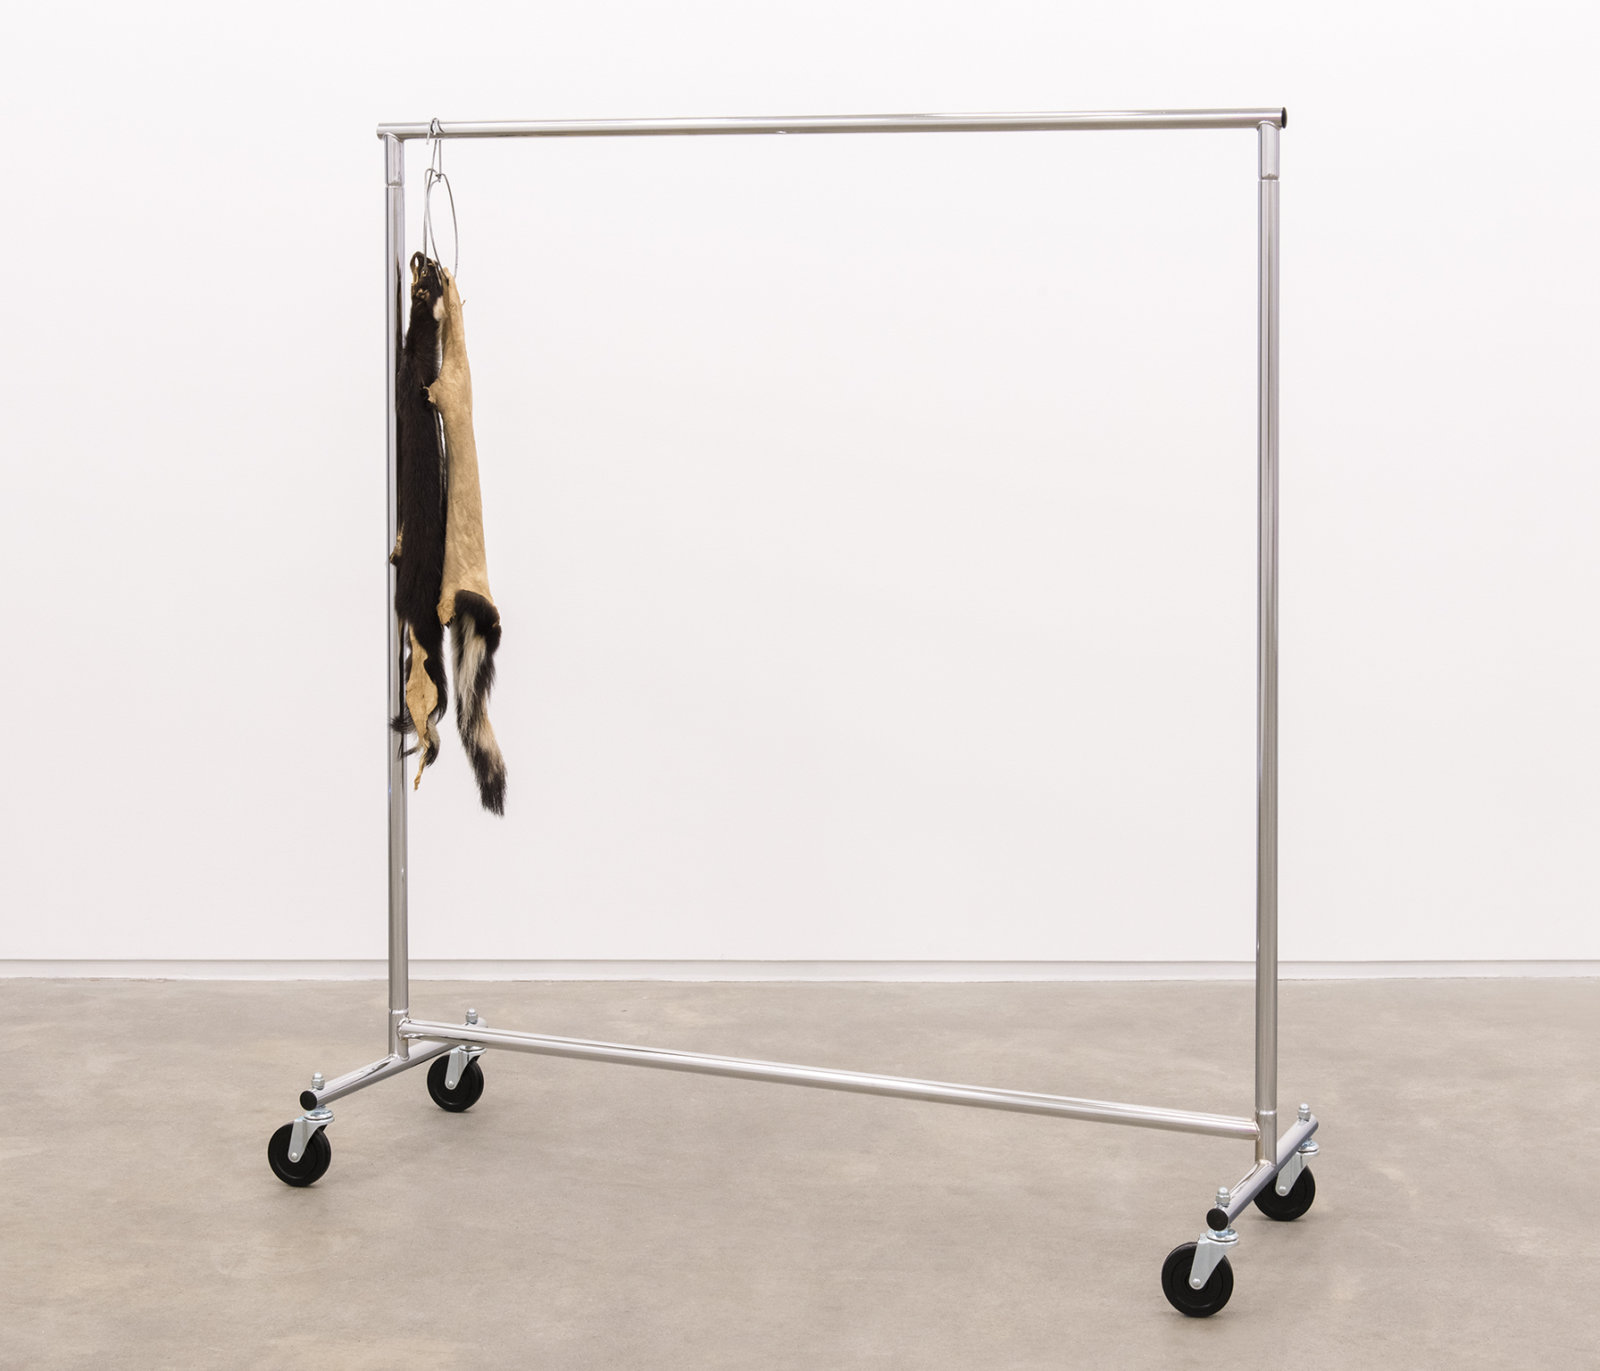 Duane Linklater, The marks left behind, 2014, skunk furs, garment rack, hangers, 66 x 60 x 20 in. (168 x 151 x 52 cm)